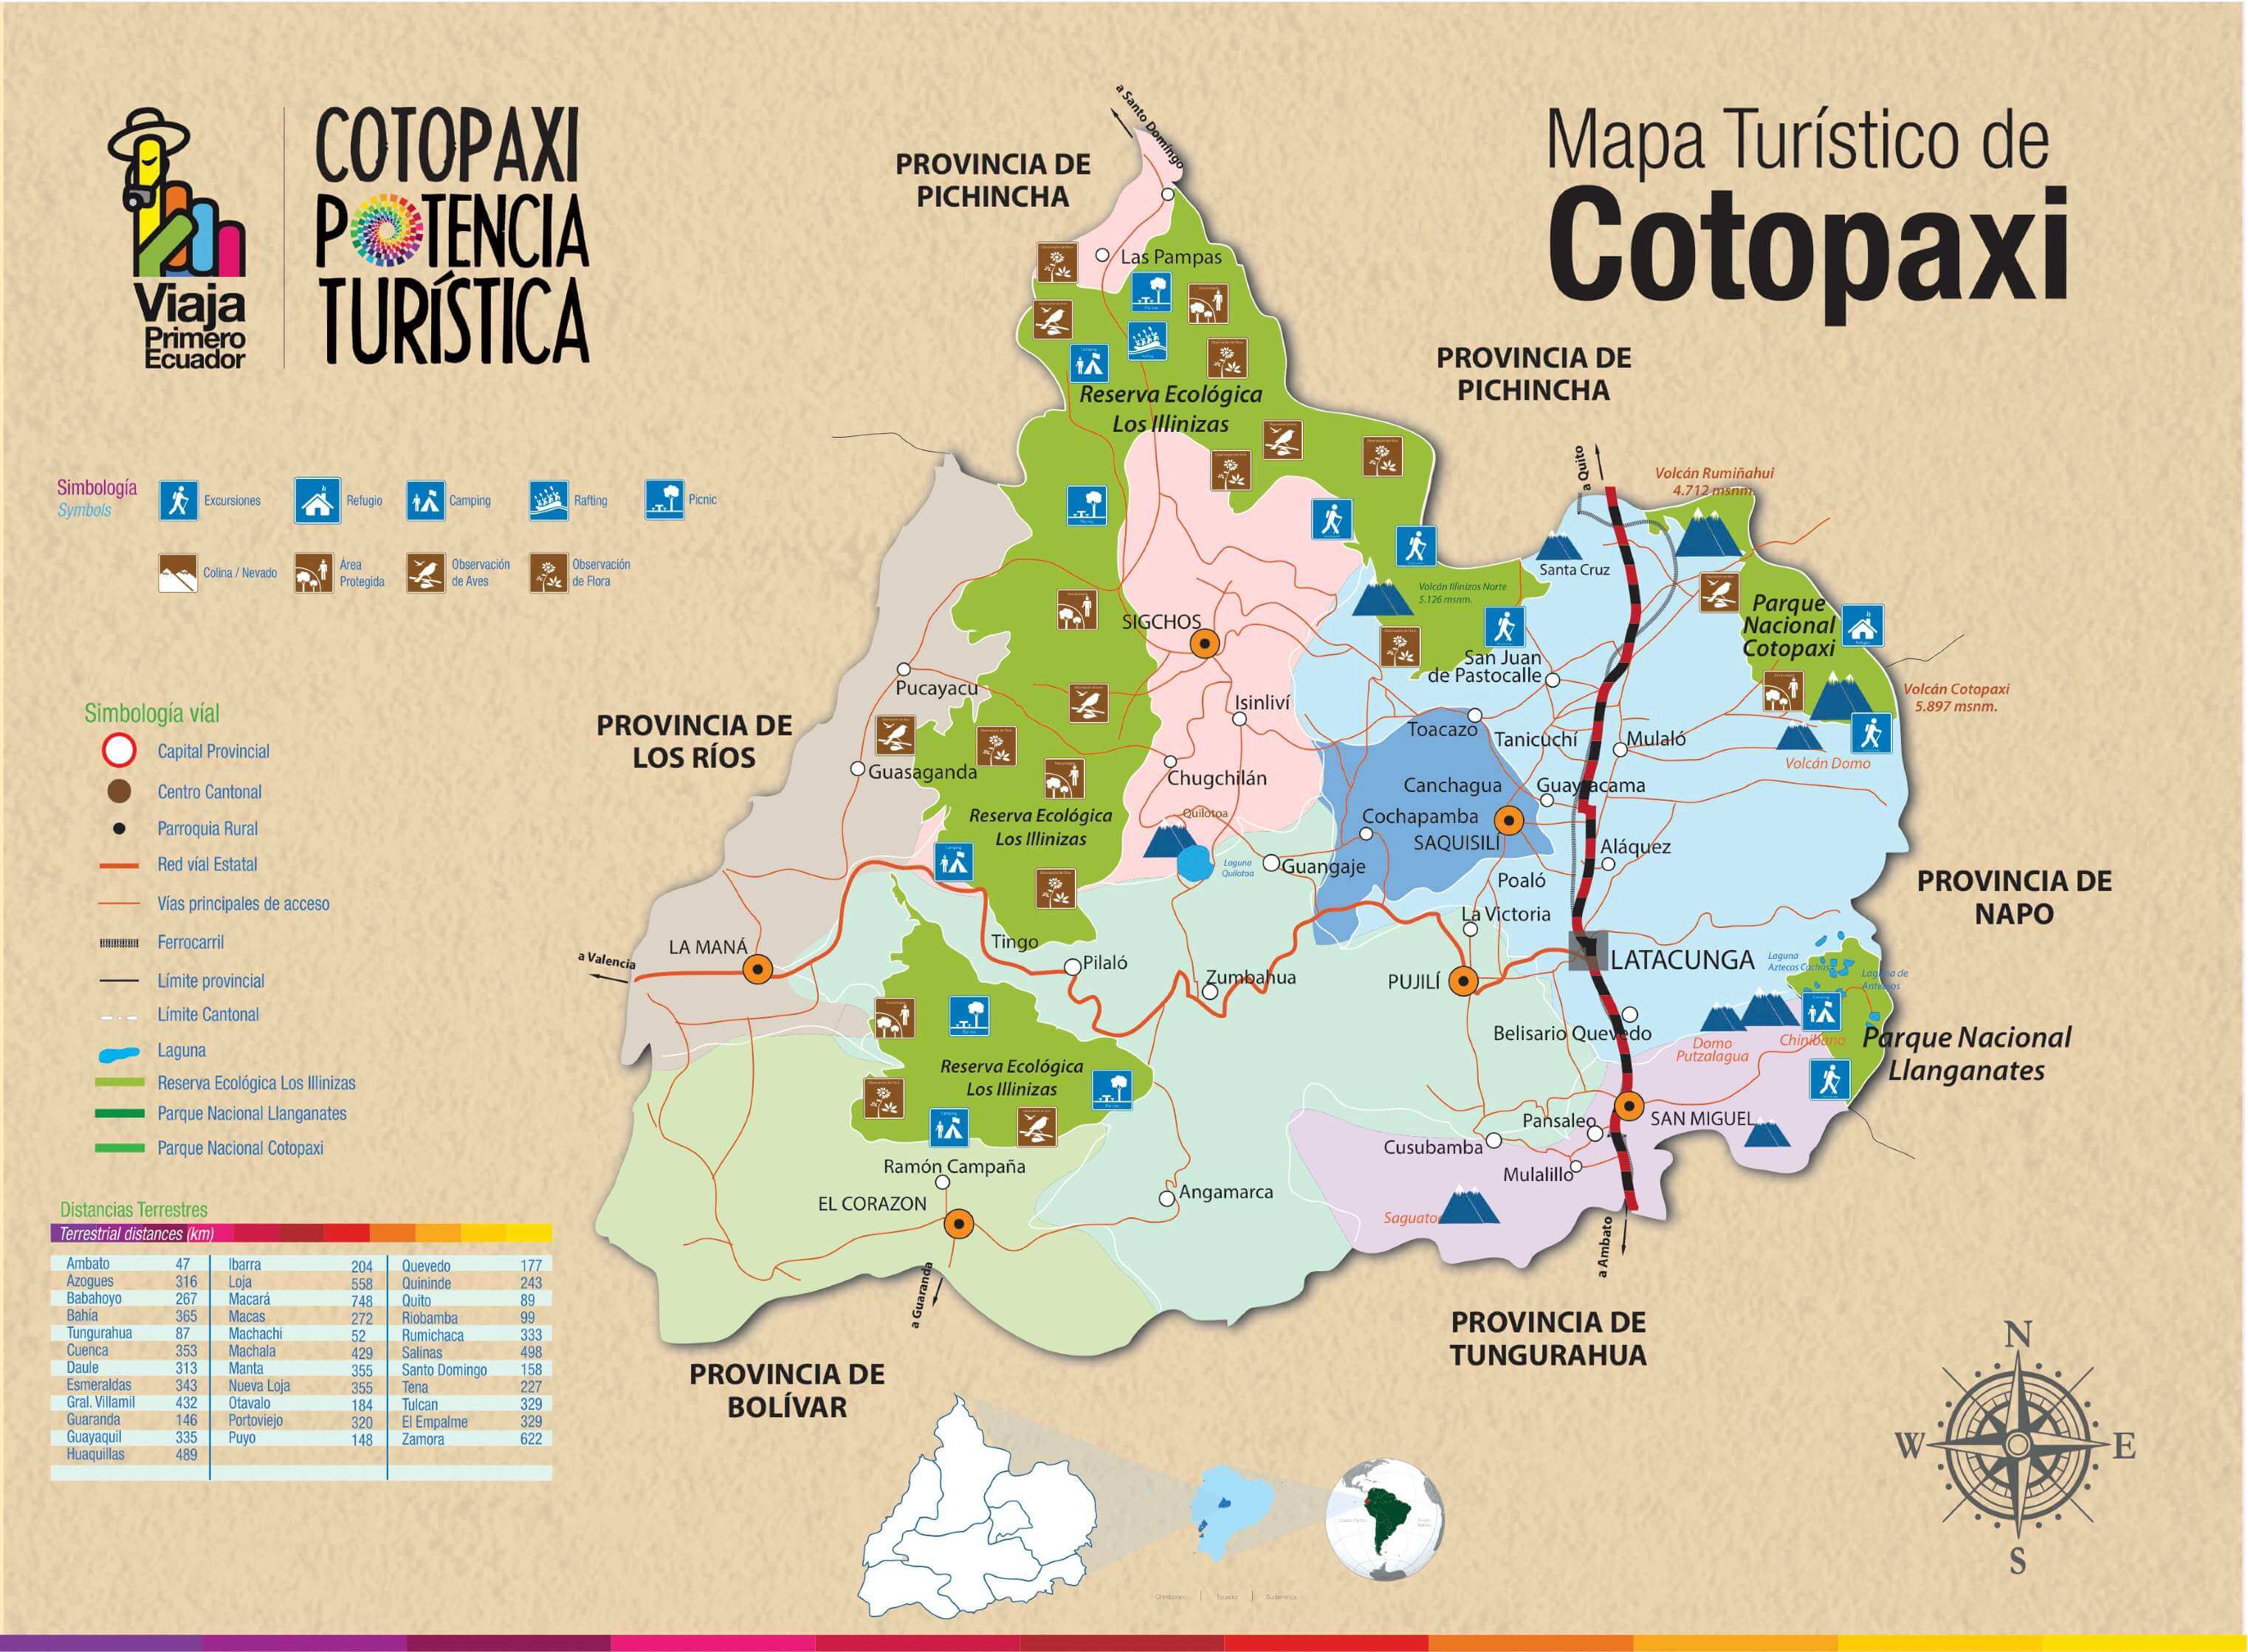 Tourist Attractions Map of (Latacunga) Cotopaxi, Ecuador - PlanetAndes